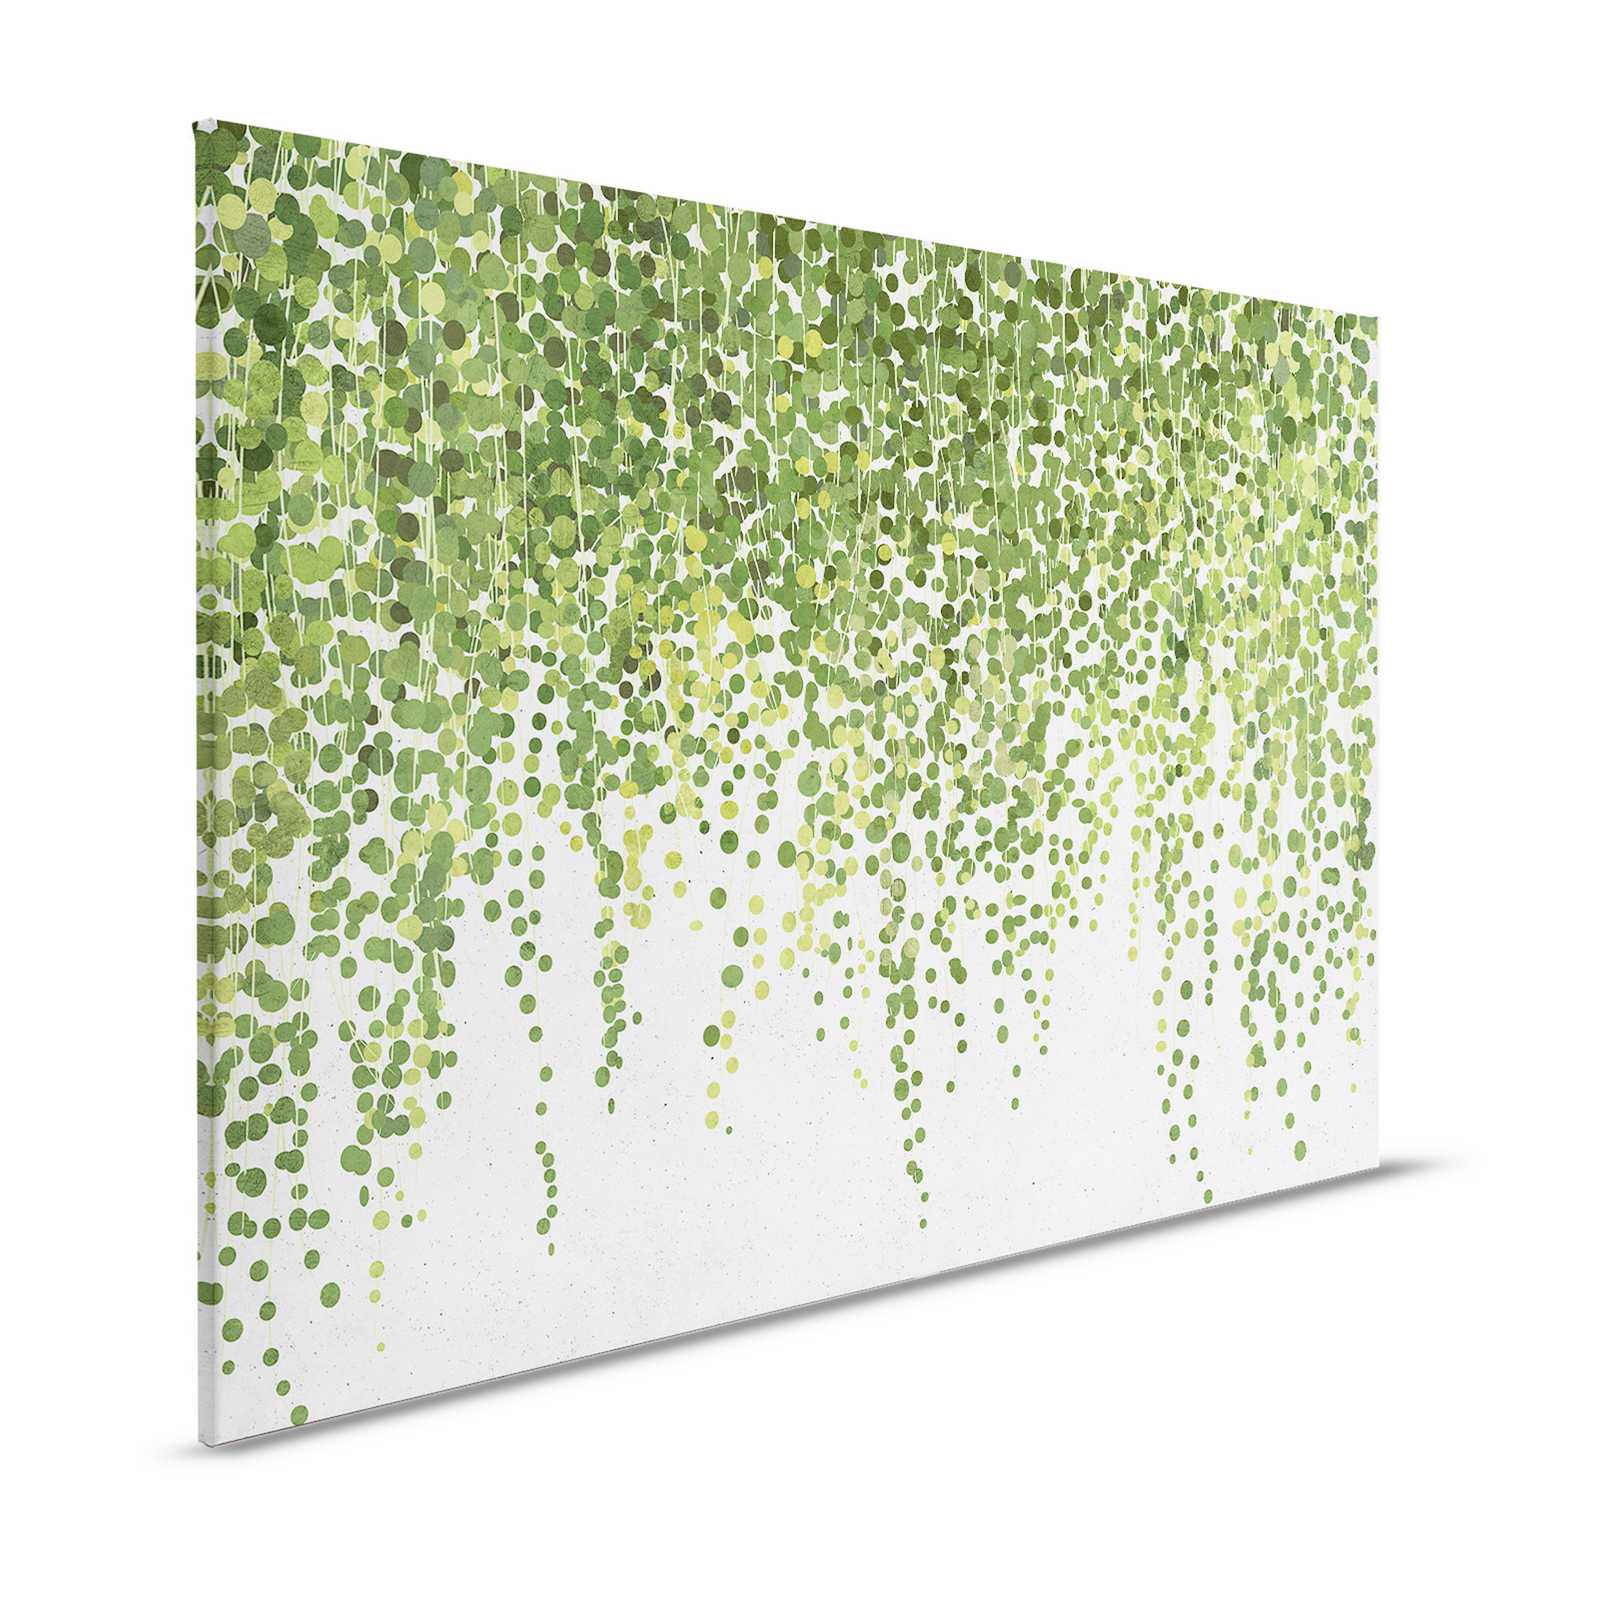 Hanging Garden 1 - Leinwandbild Blätter-Ranken, Hängegarten in Beton Optik – 1,20 m x 0,80 m
